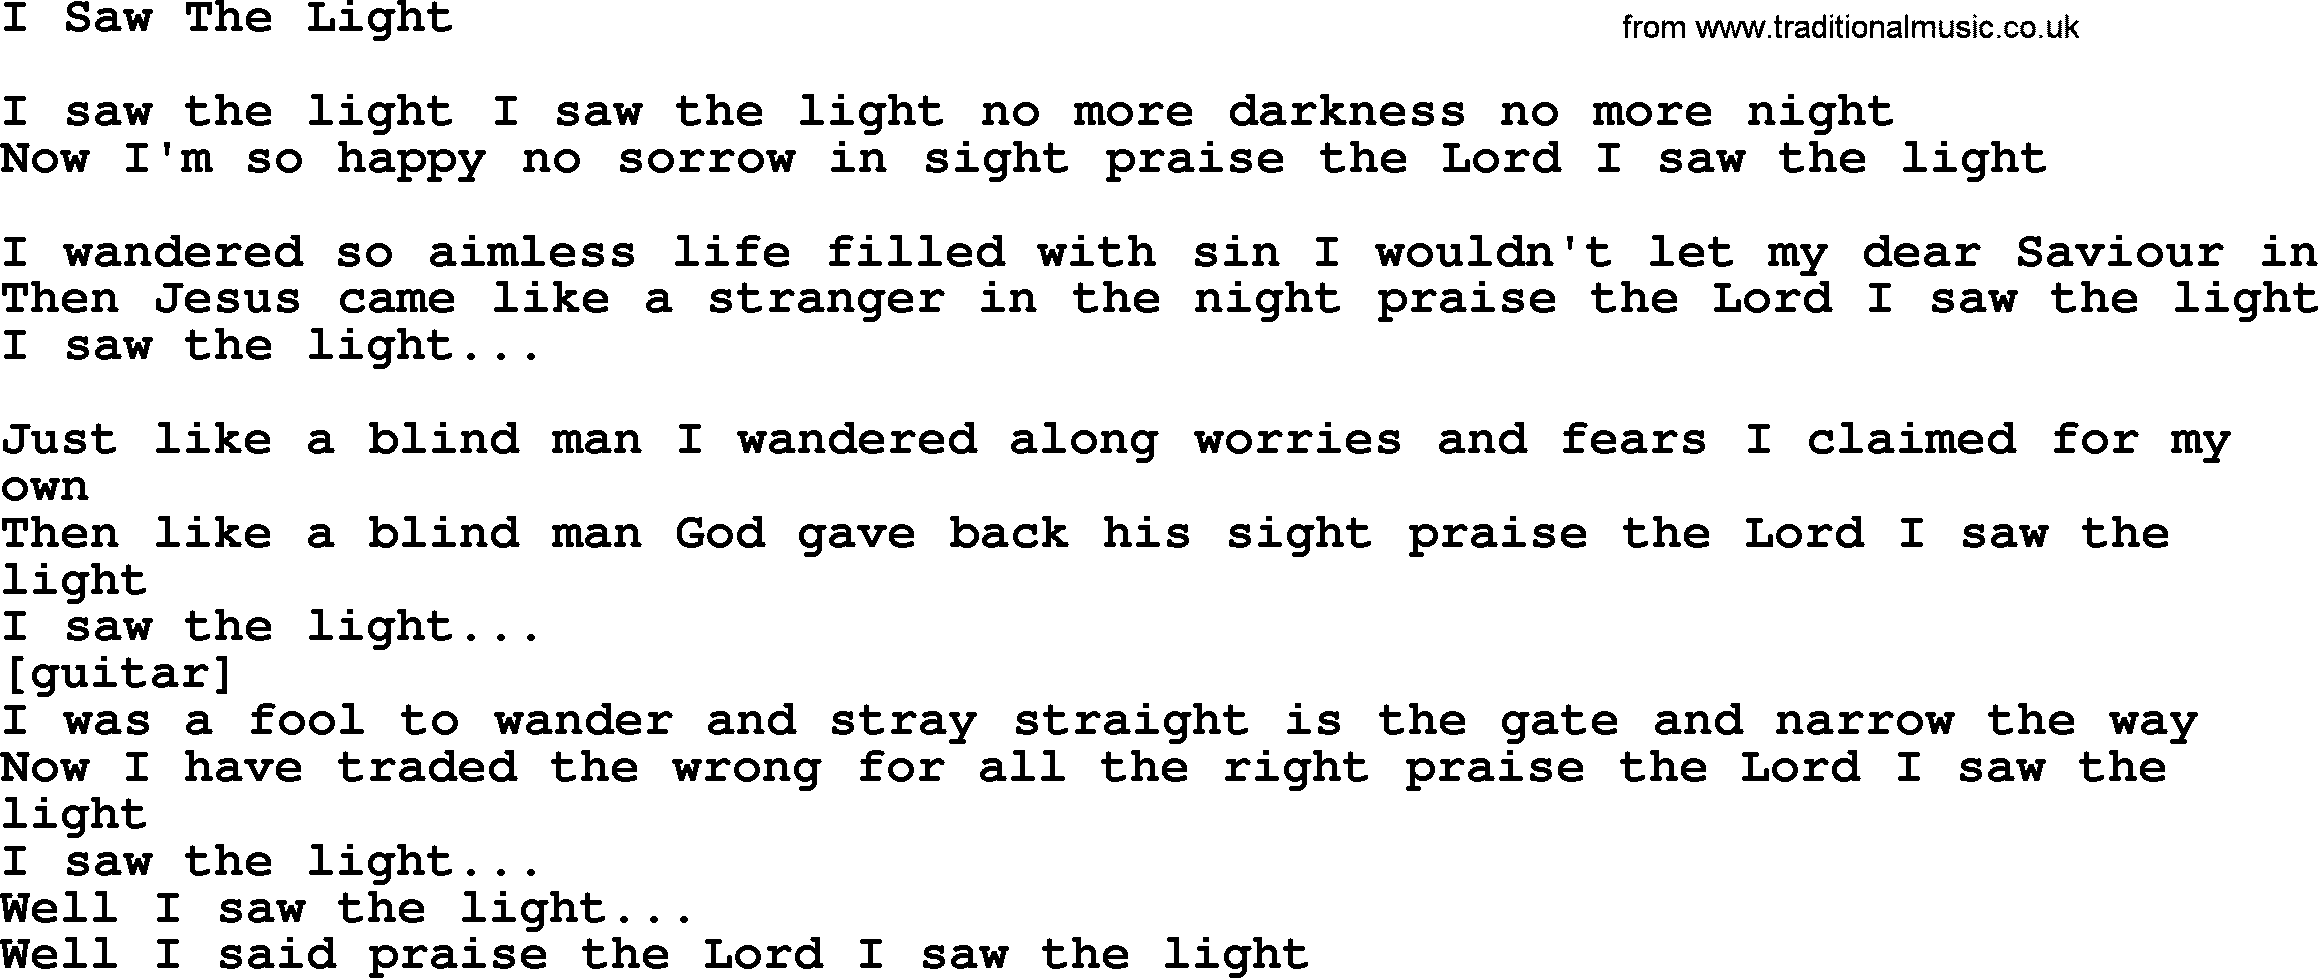 Willie Nelson song: I Saw The Light lyrics